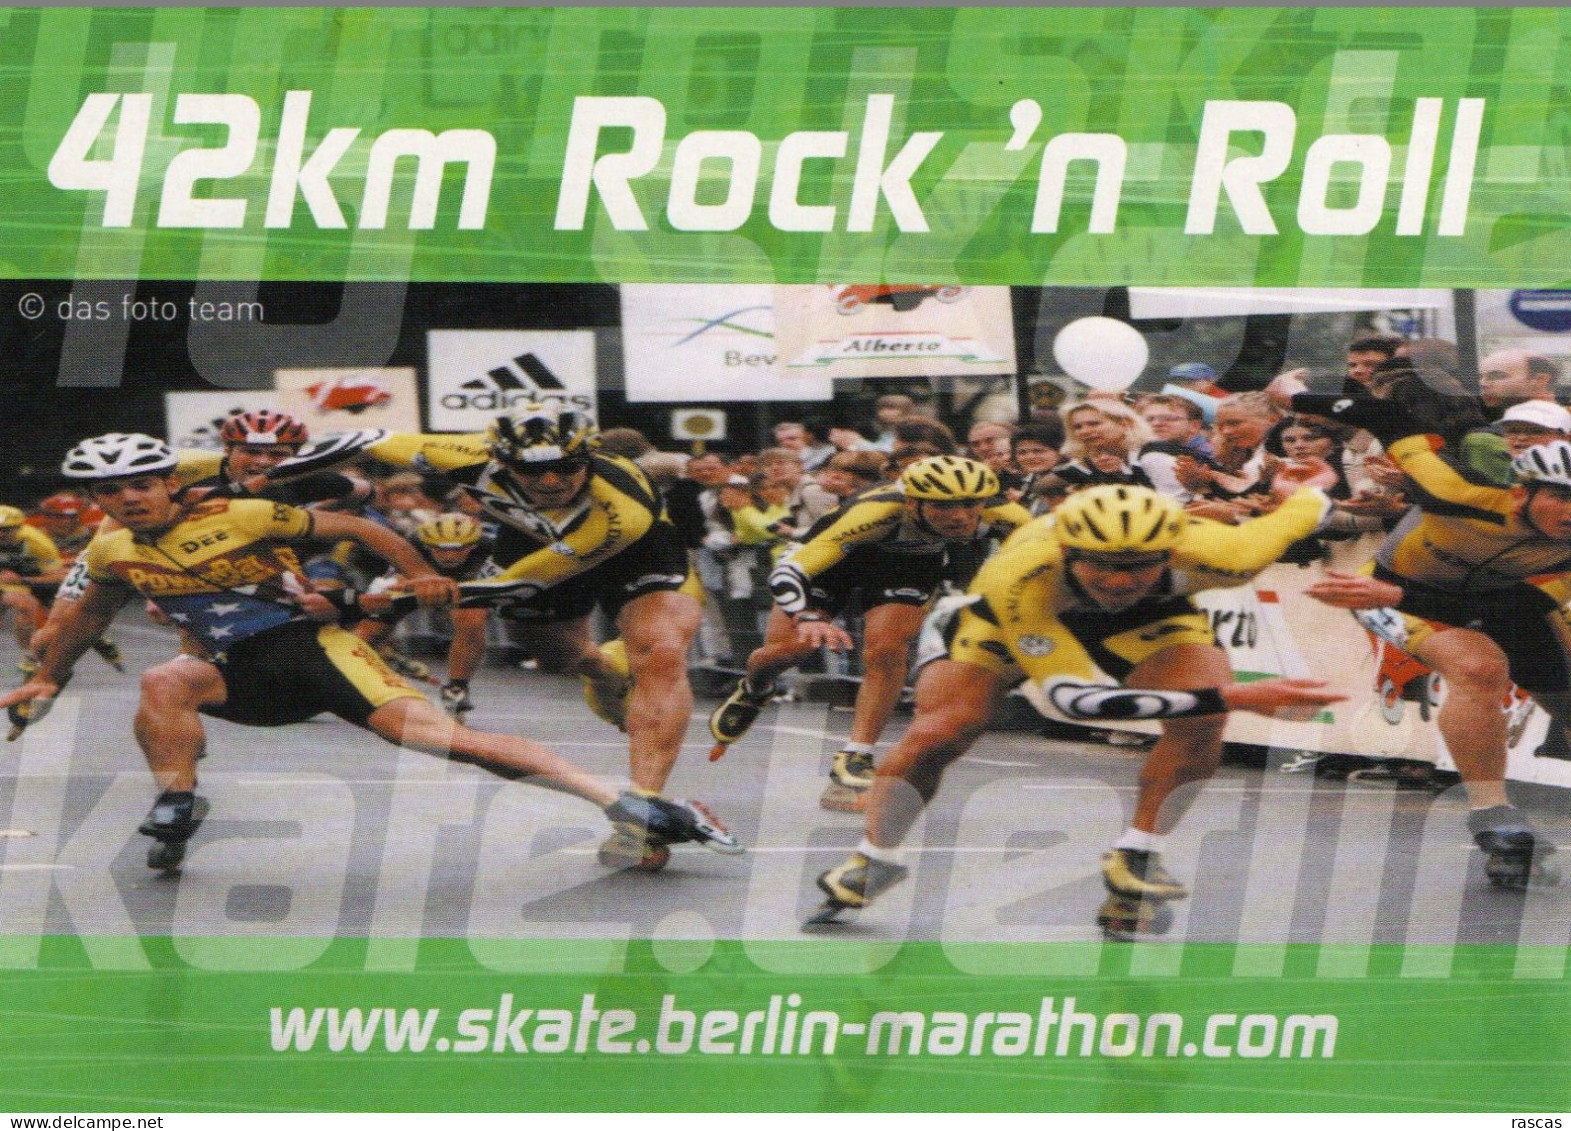 CLB - CPM - ROLLER - SKATE BERLIN MARATHON - 42 KM ROCK 'N ROLL - Athletics